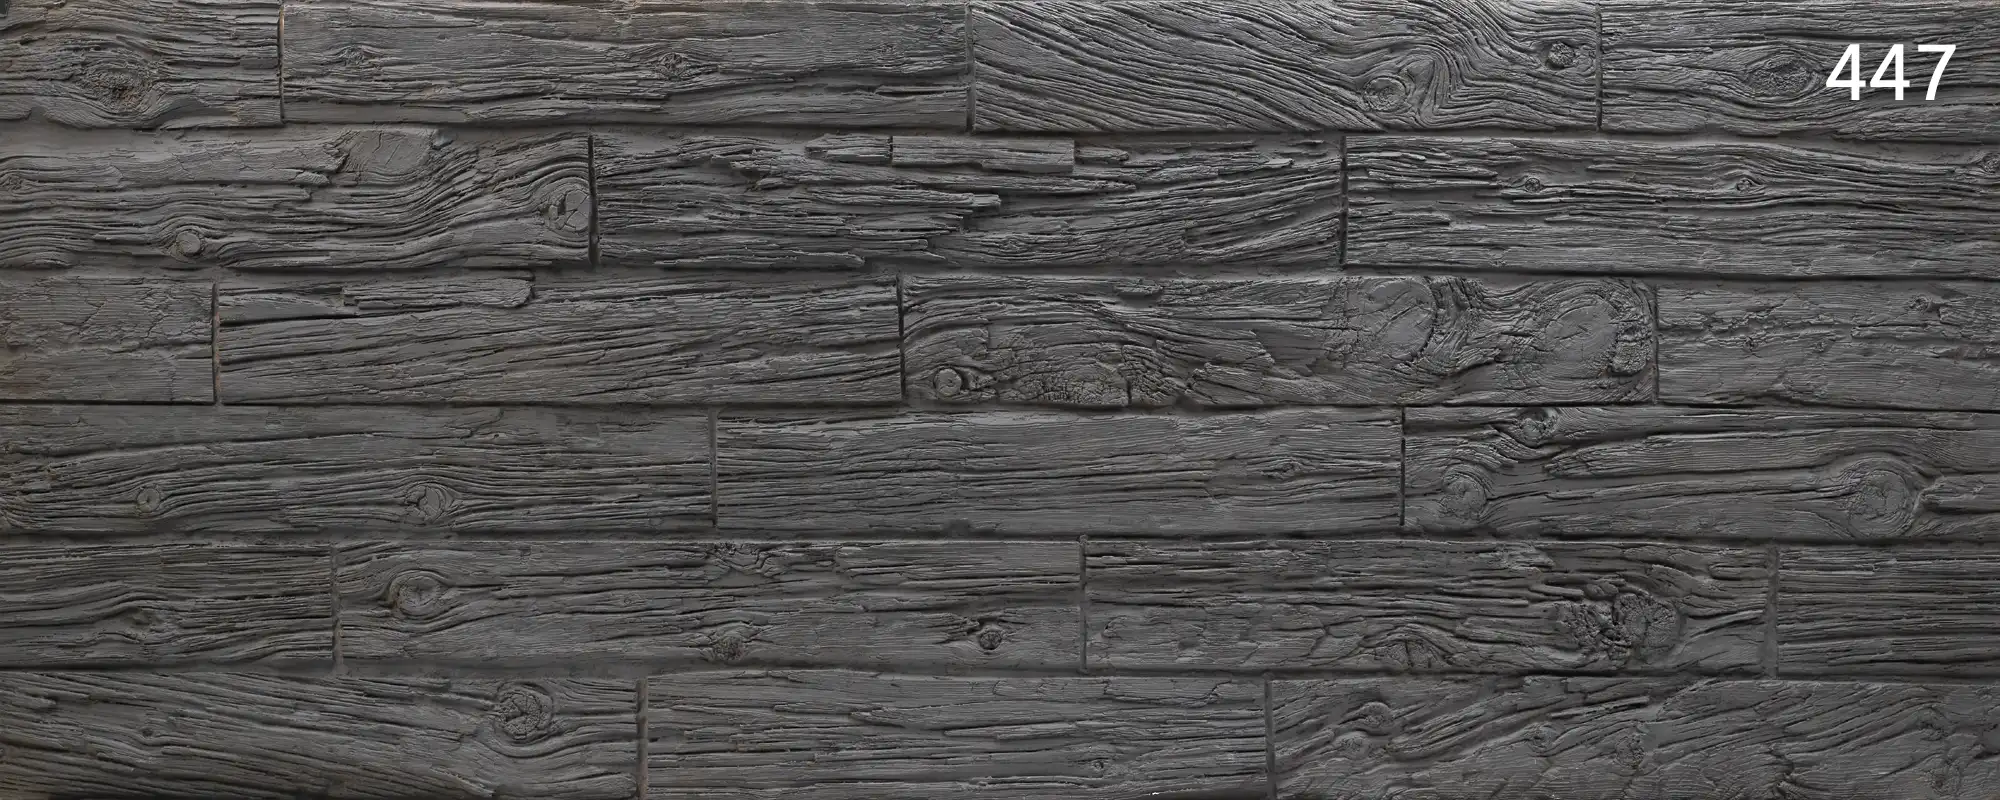 StoneslikeStones Holzdesignpaneel 447 TRAVIESA negra horizontal · ca. 3,30x1,30 m - Download mit Rechtsklick